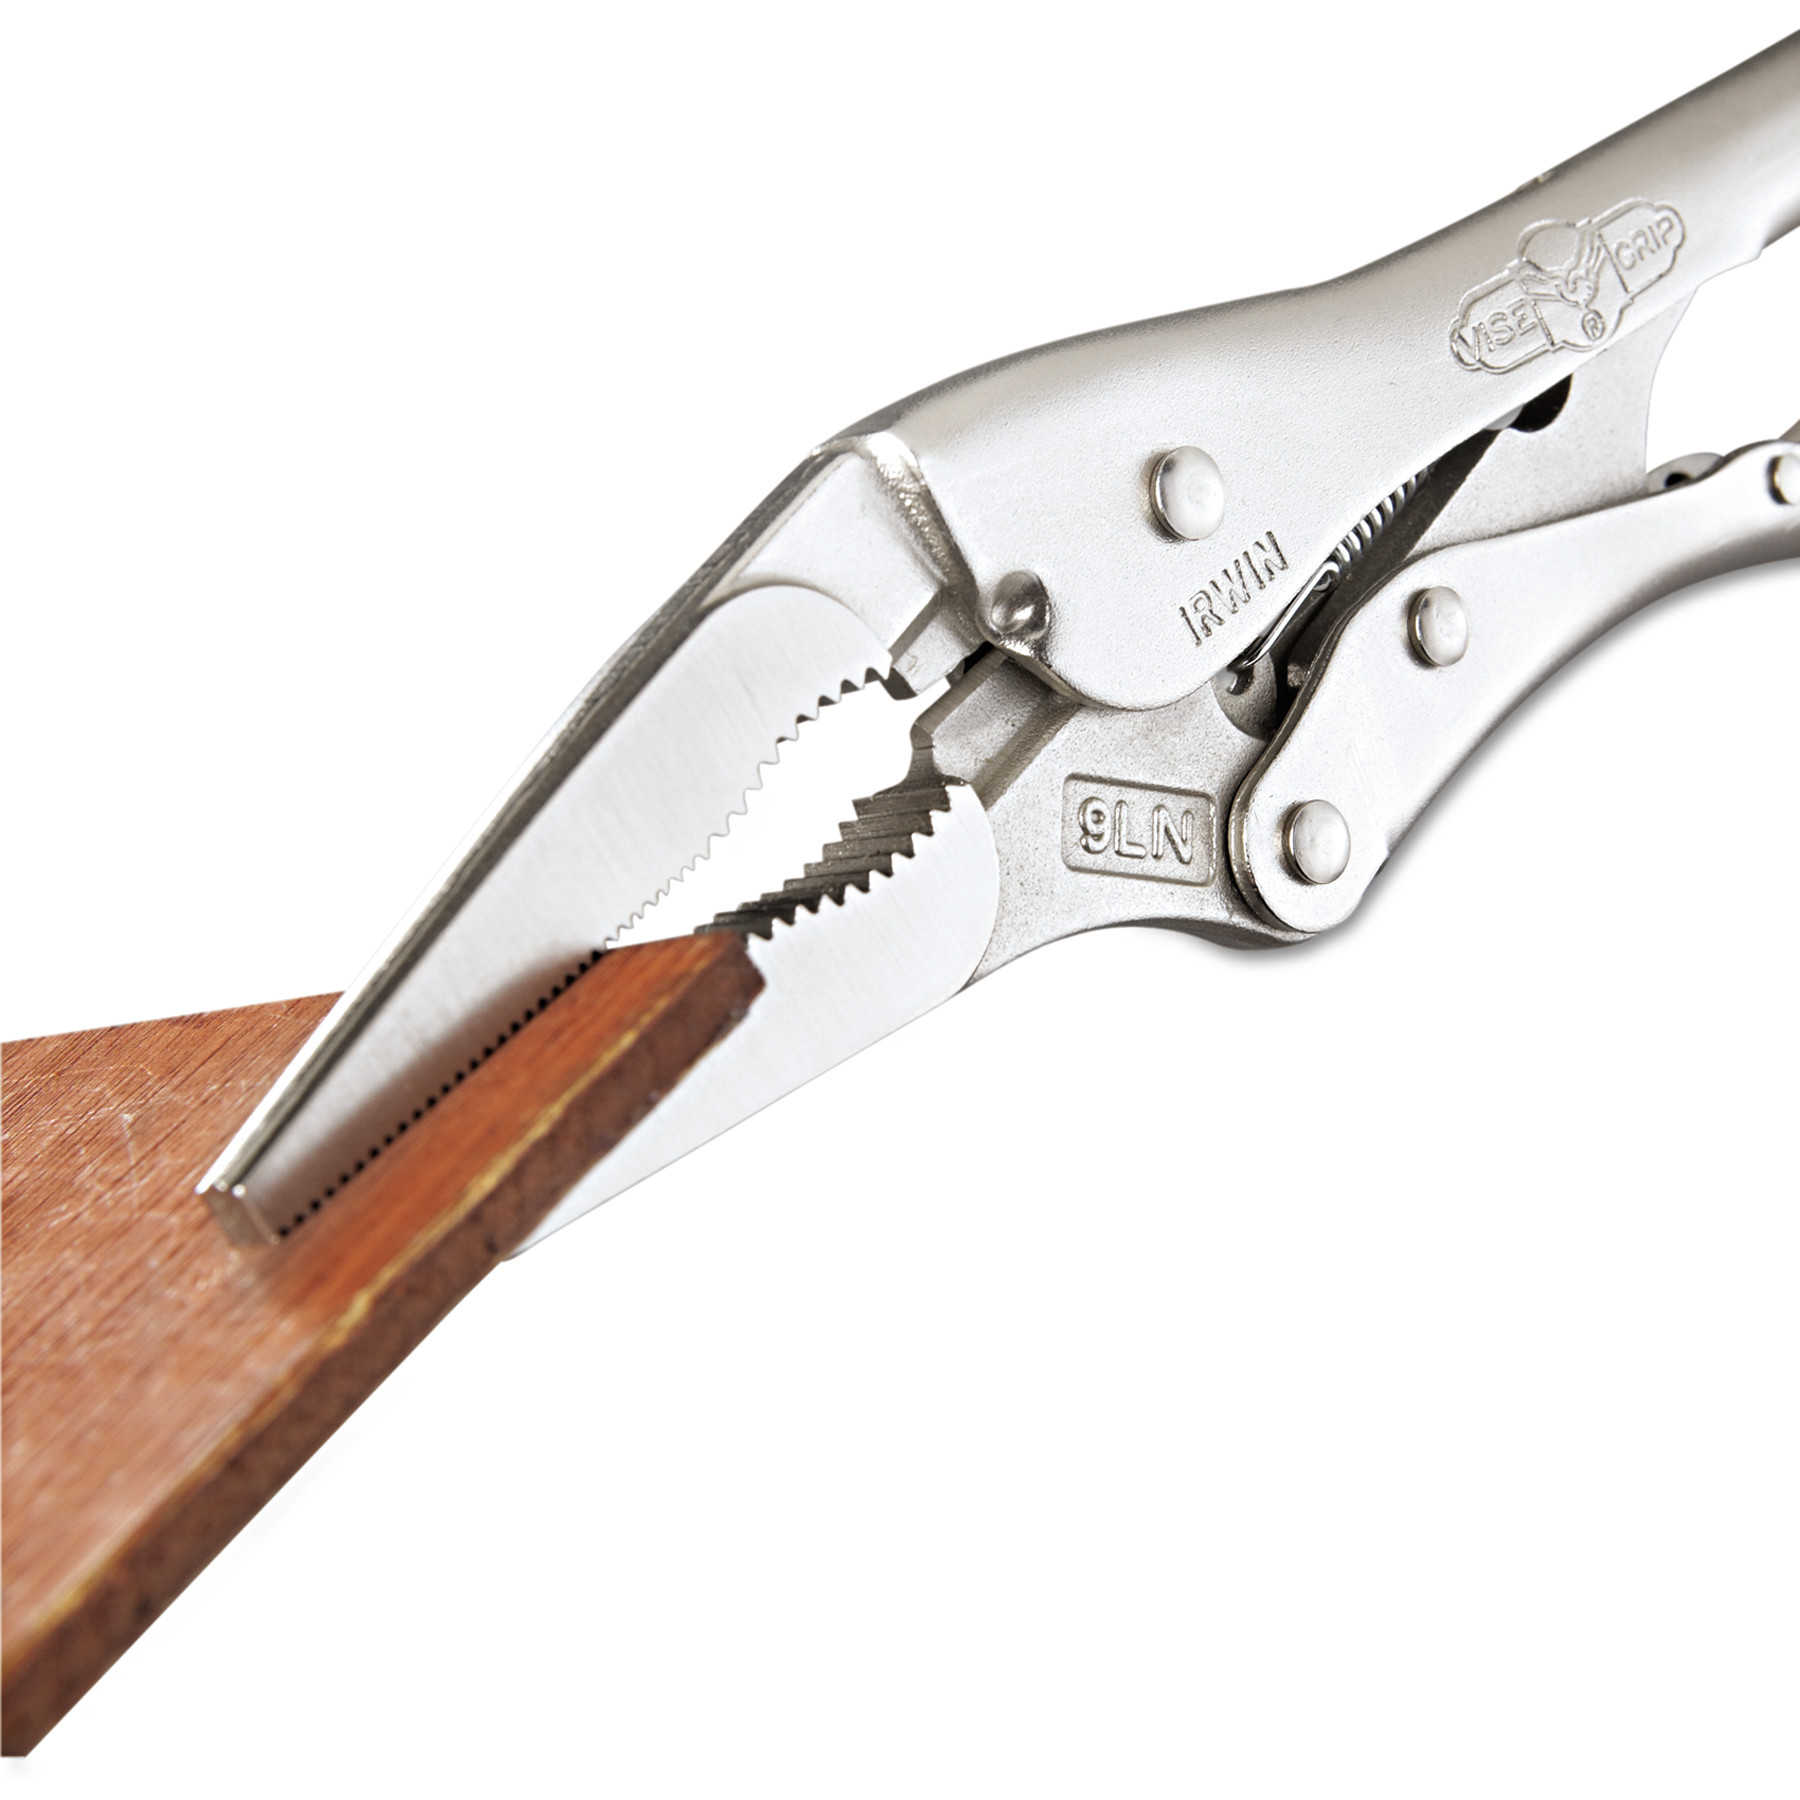 Irwin Vise-Grip Locking Pliers, Steel, 9LN